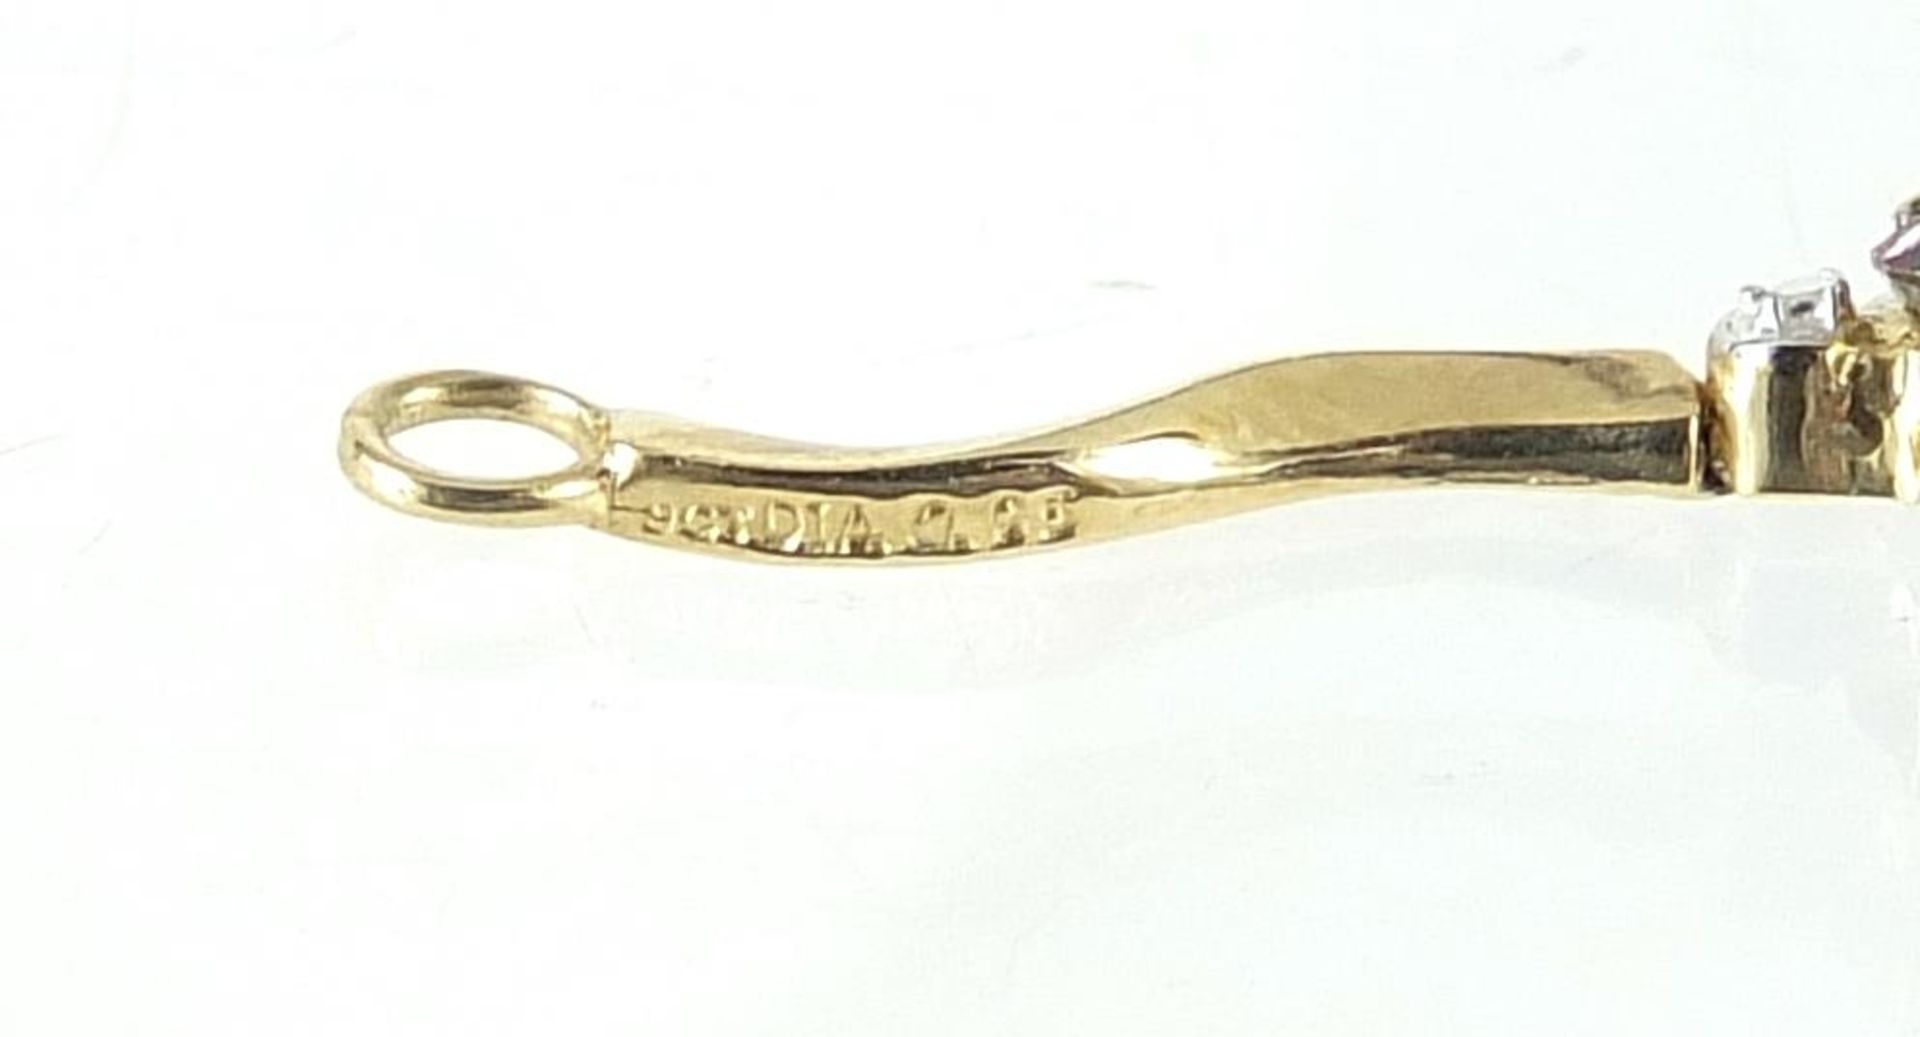 9ct gold mystic topaz and diamond bracelet, 18cm in length, 4.2g - Image 4 of 4